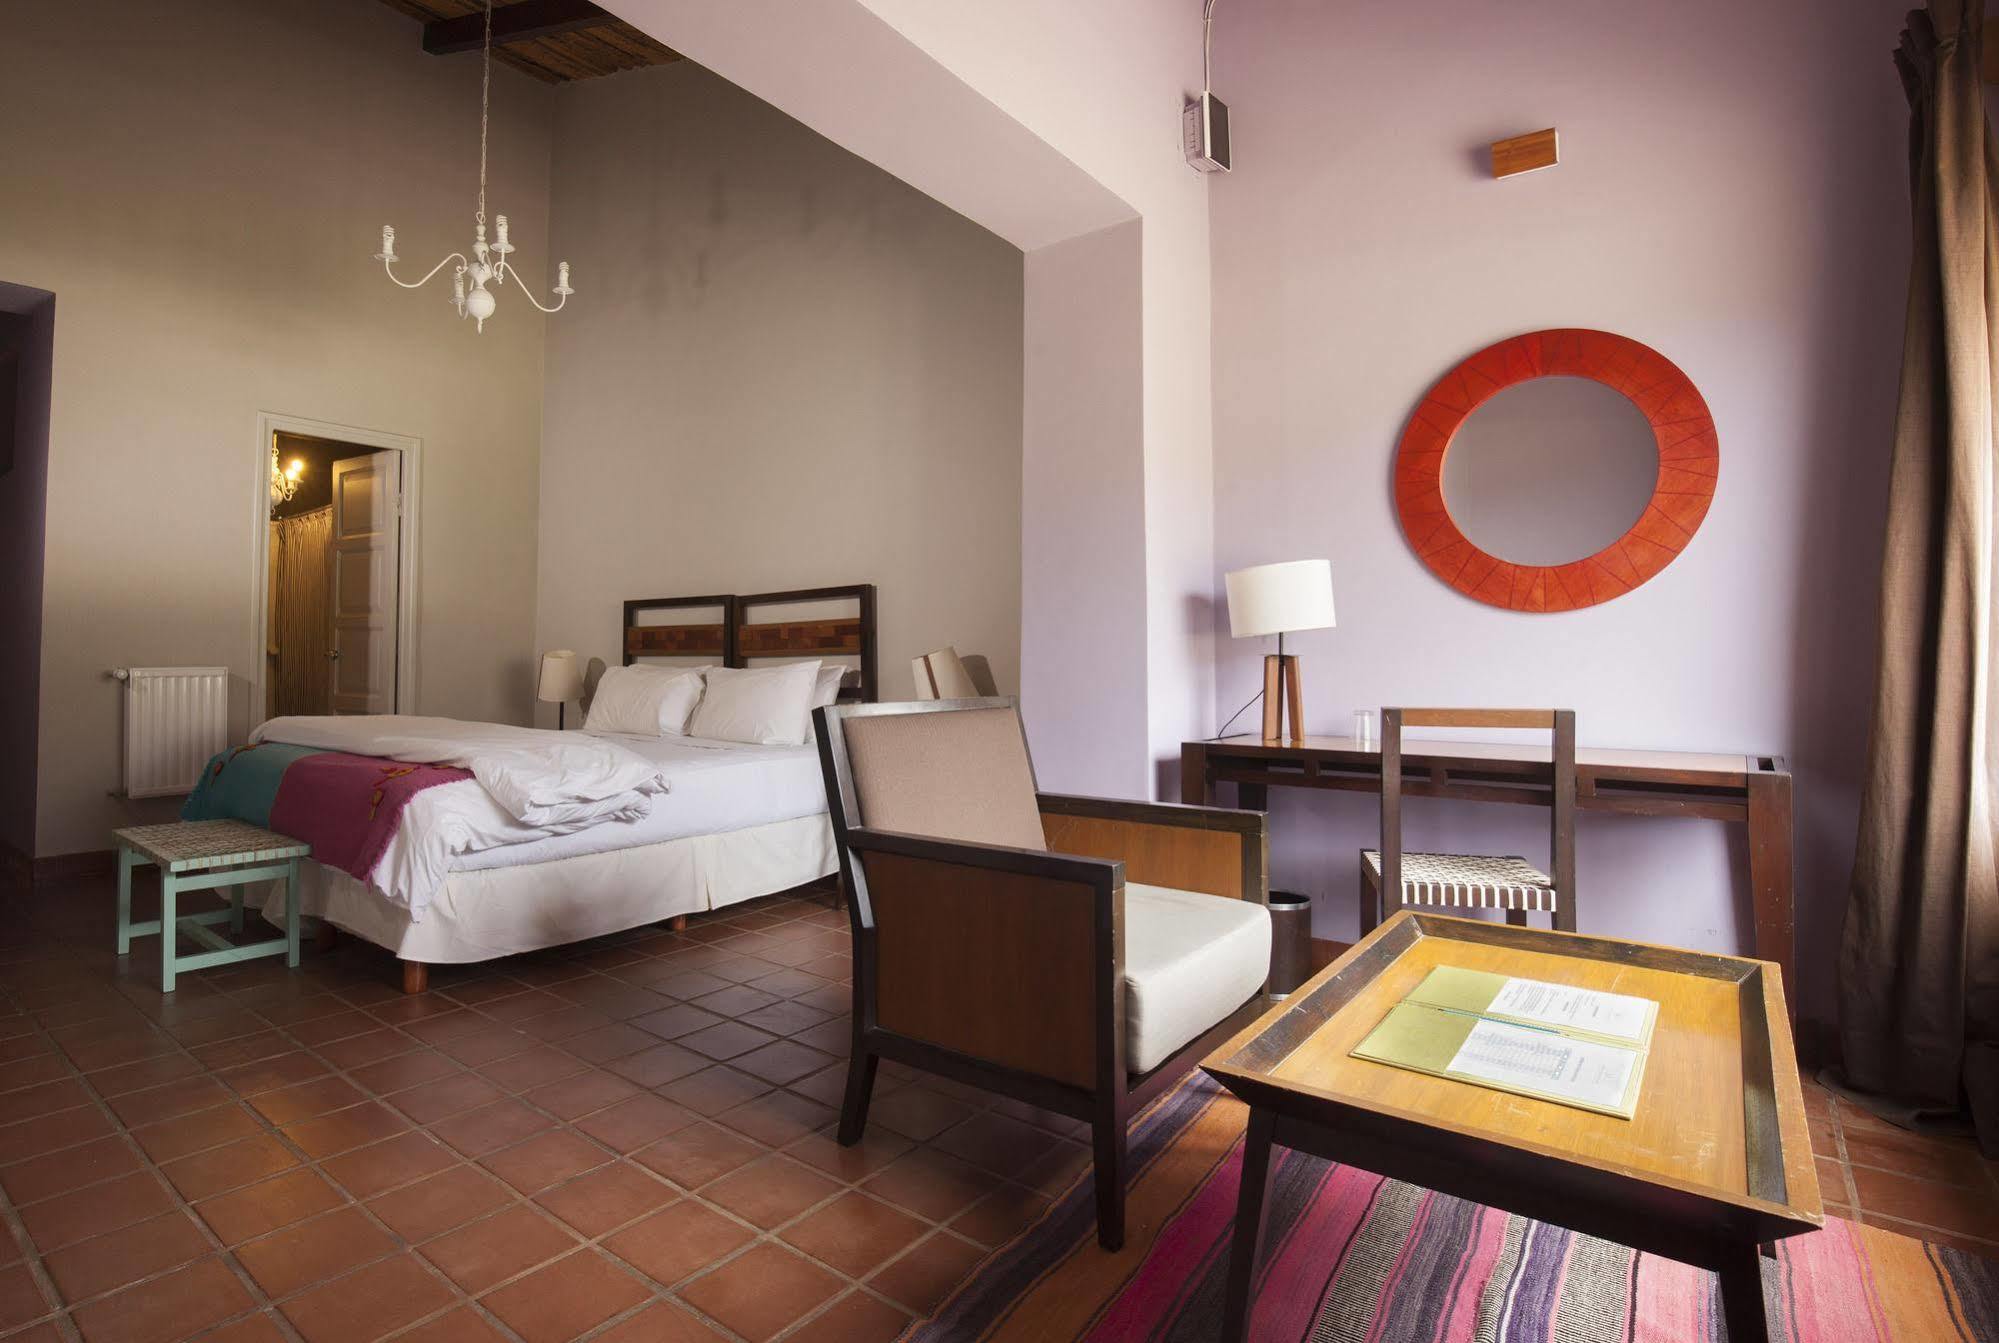 Hotel Huacalera Exteriér fotografie